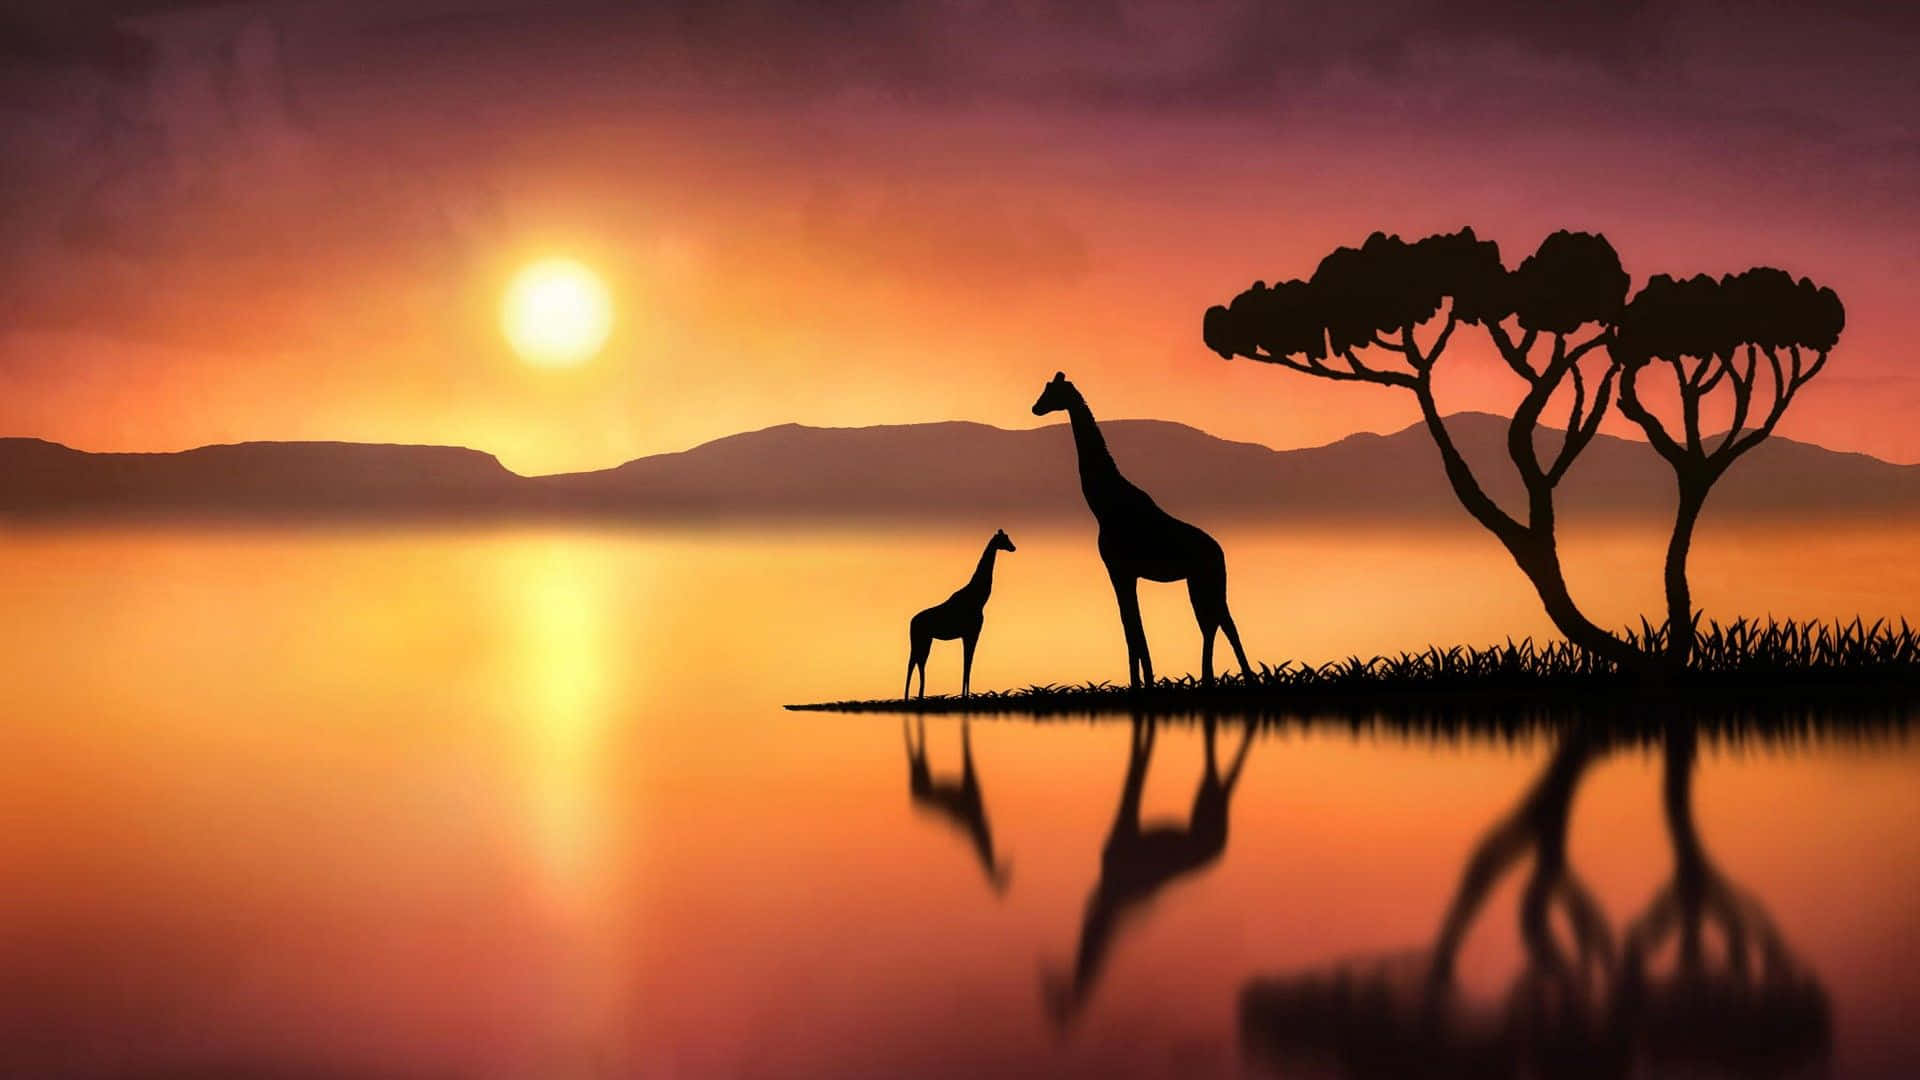 A majestic view of a giraffe in its majestic habitat